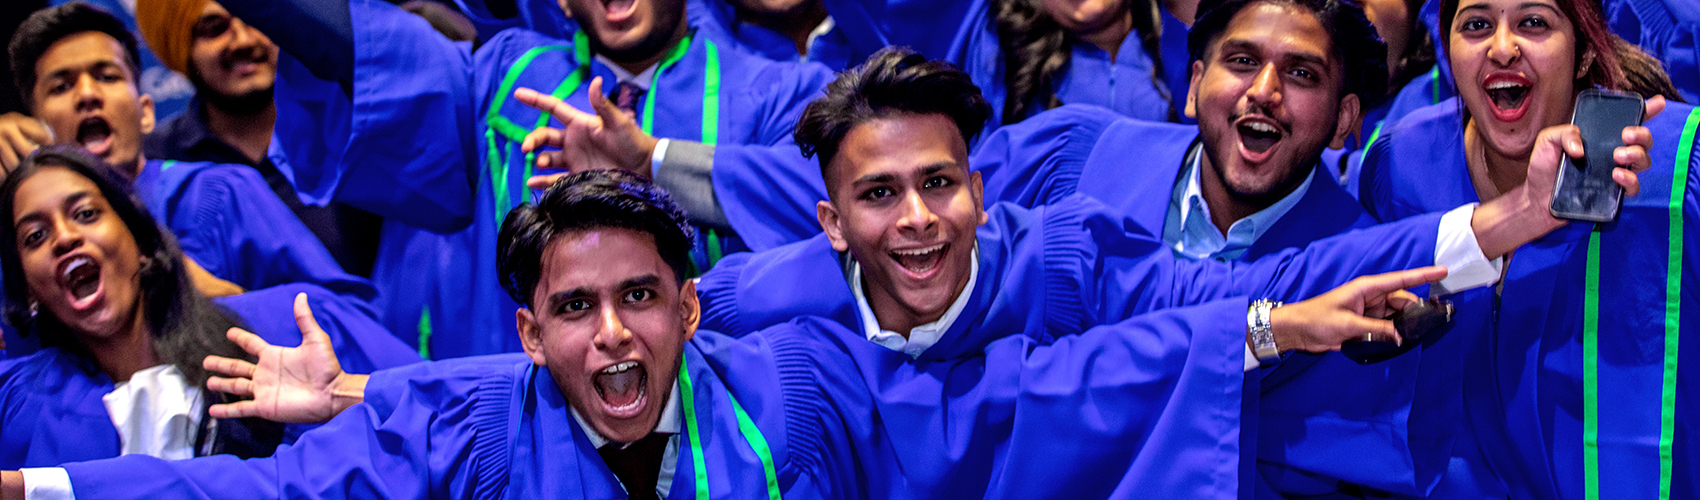 Several graduates smiling and cheering at a convocation celebration